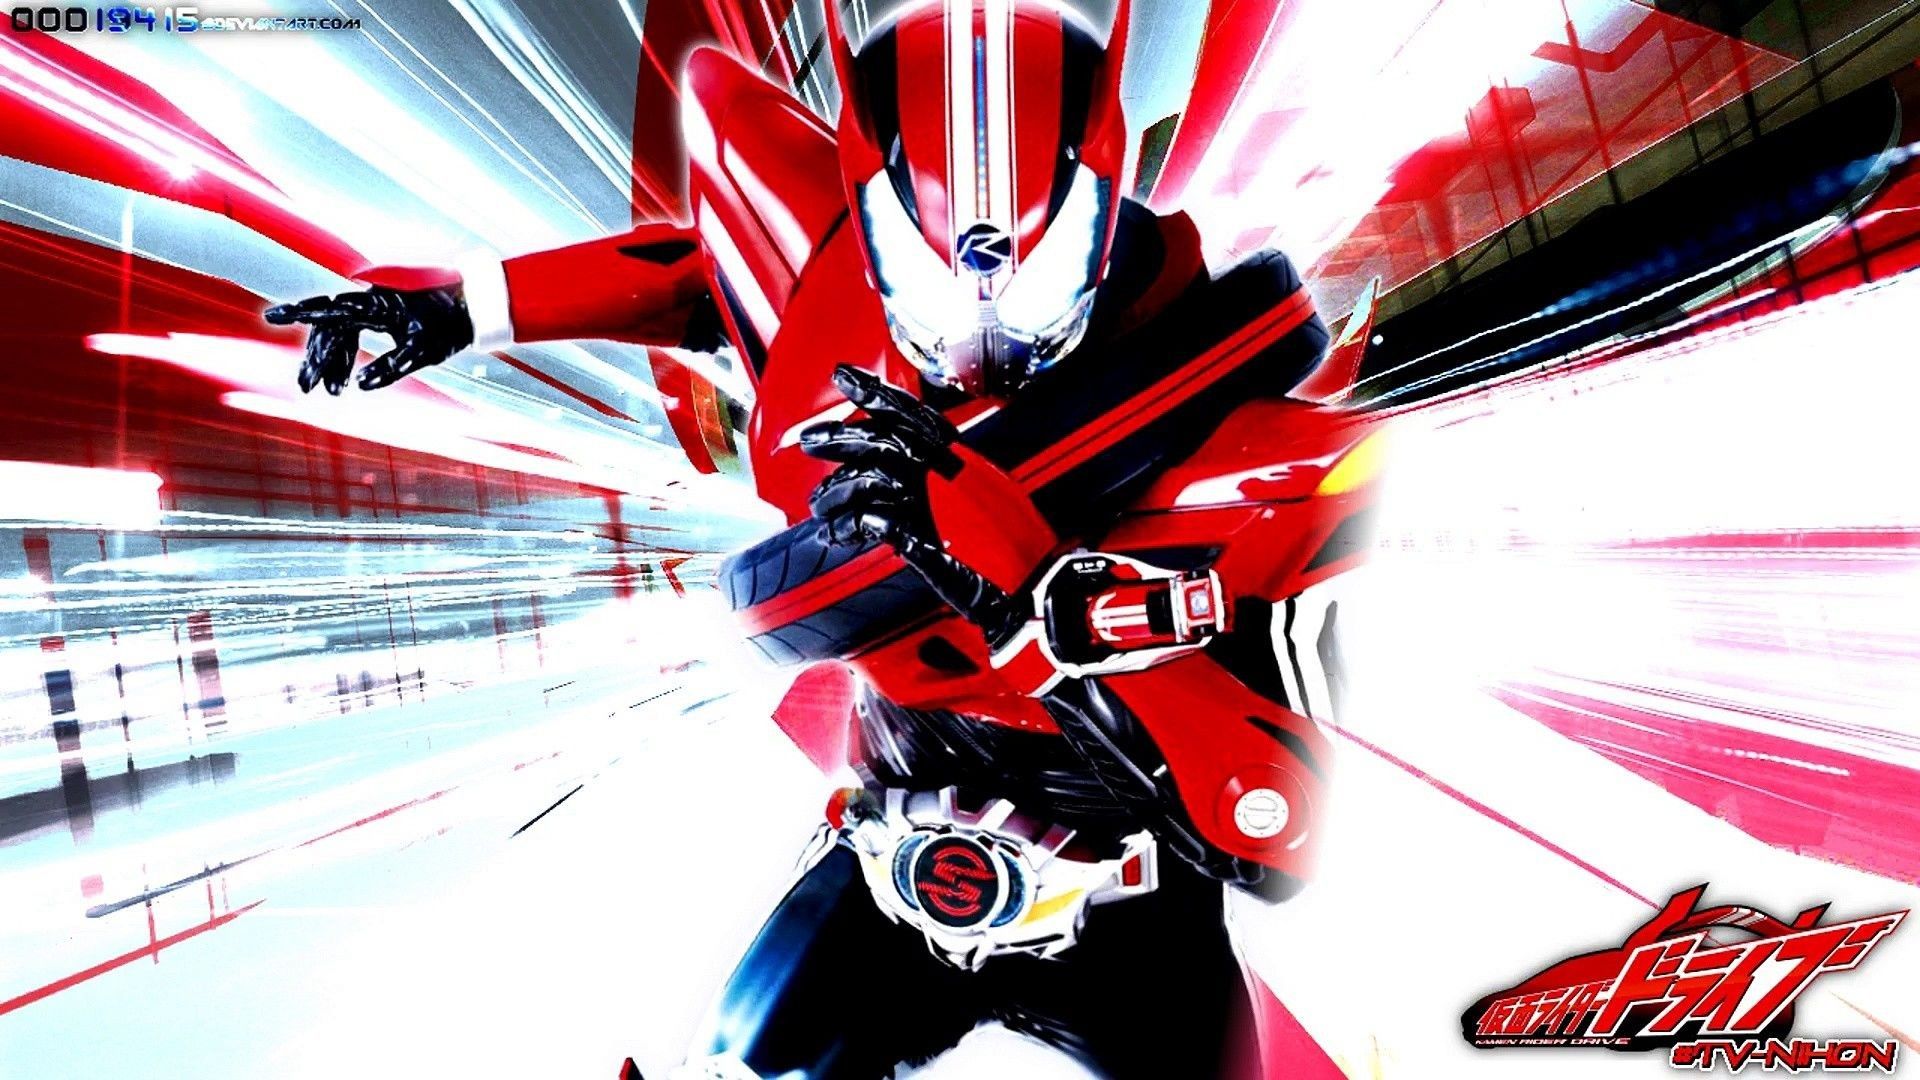 Henshin! 29 Seri Kamen Rider Dari Masa ke Masa, Mana Favoritmu?